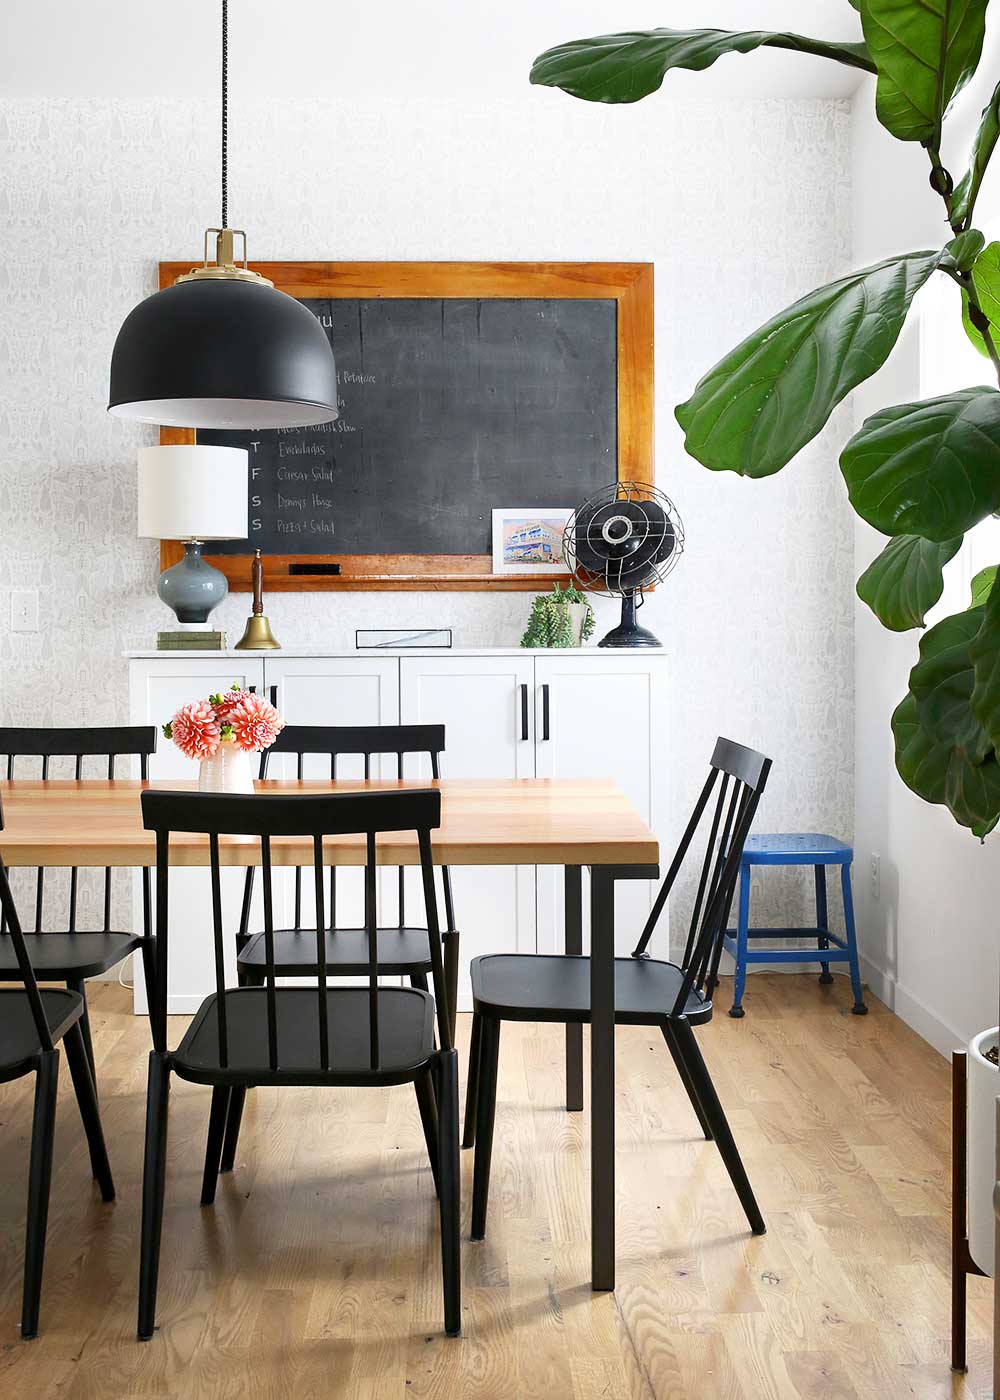 insdispensable minimaliste salle a manger decoration